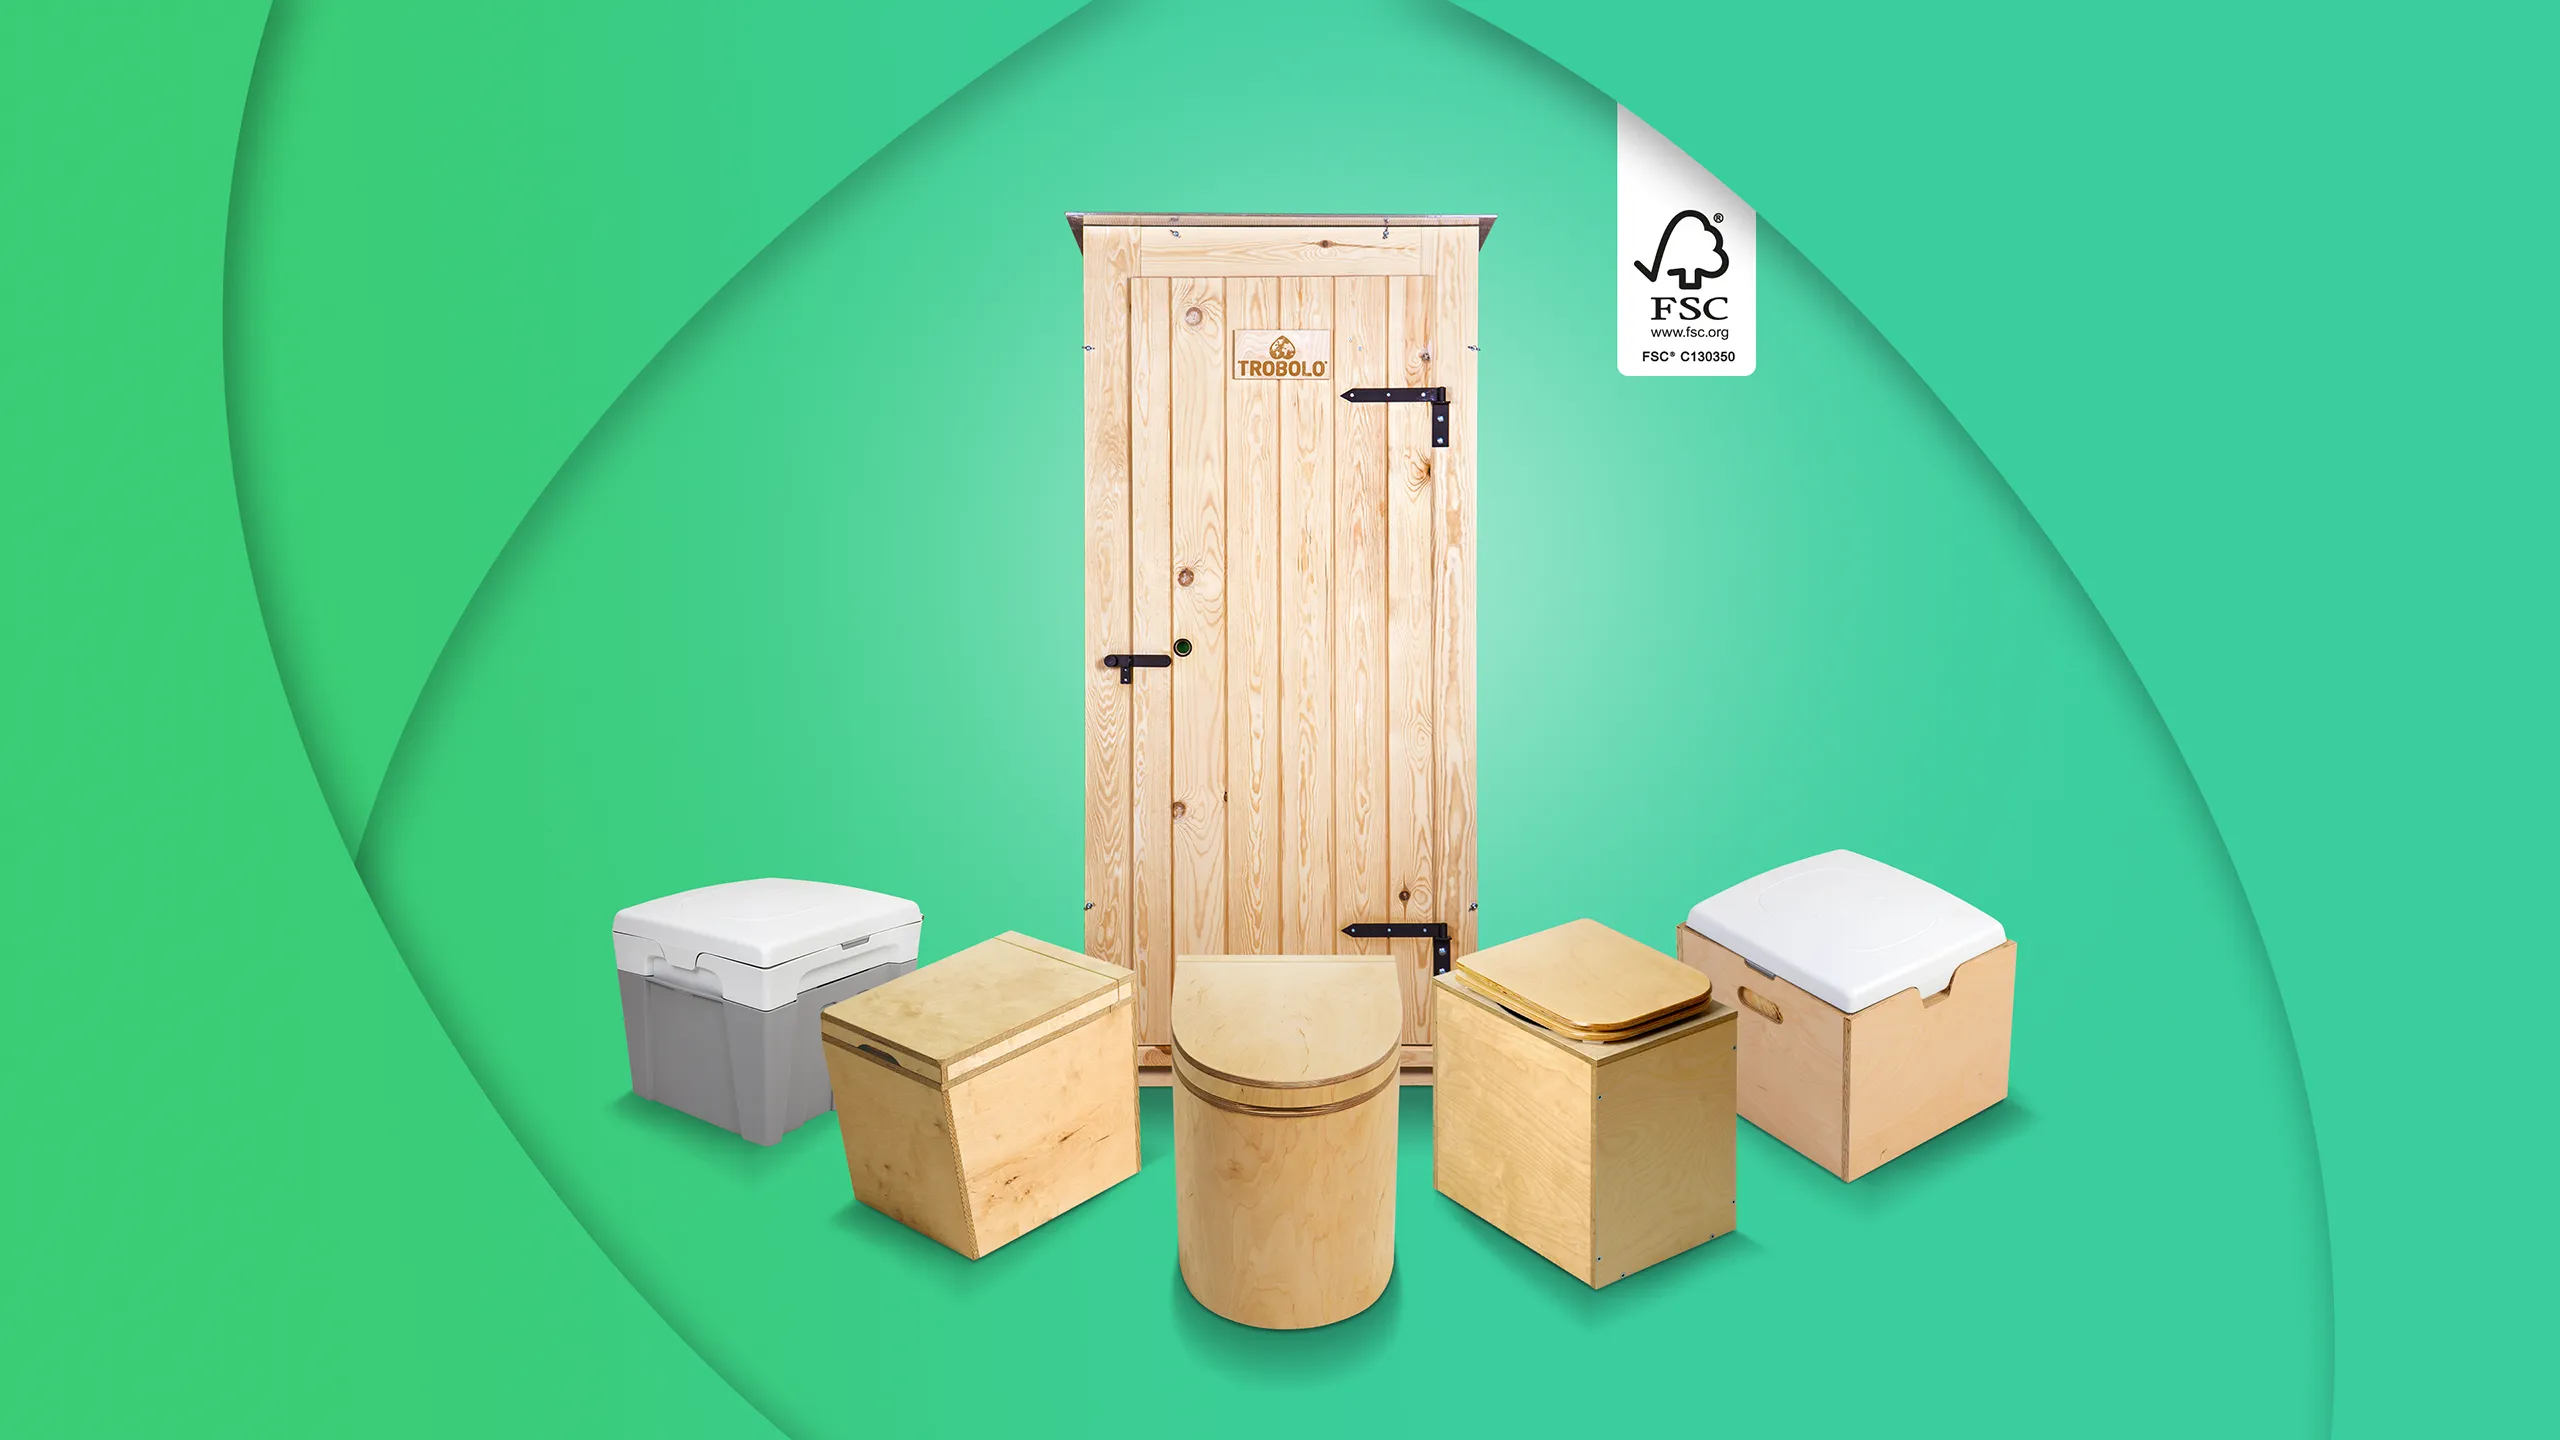 Describe Susceptible to Plain Smart composting toilets self-sufficient & sustainable I TROBOLO